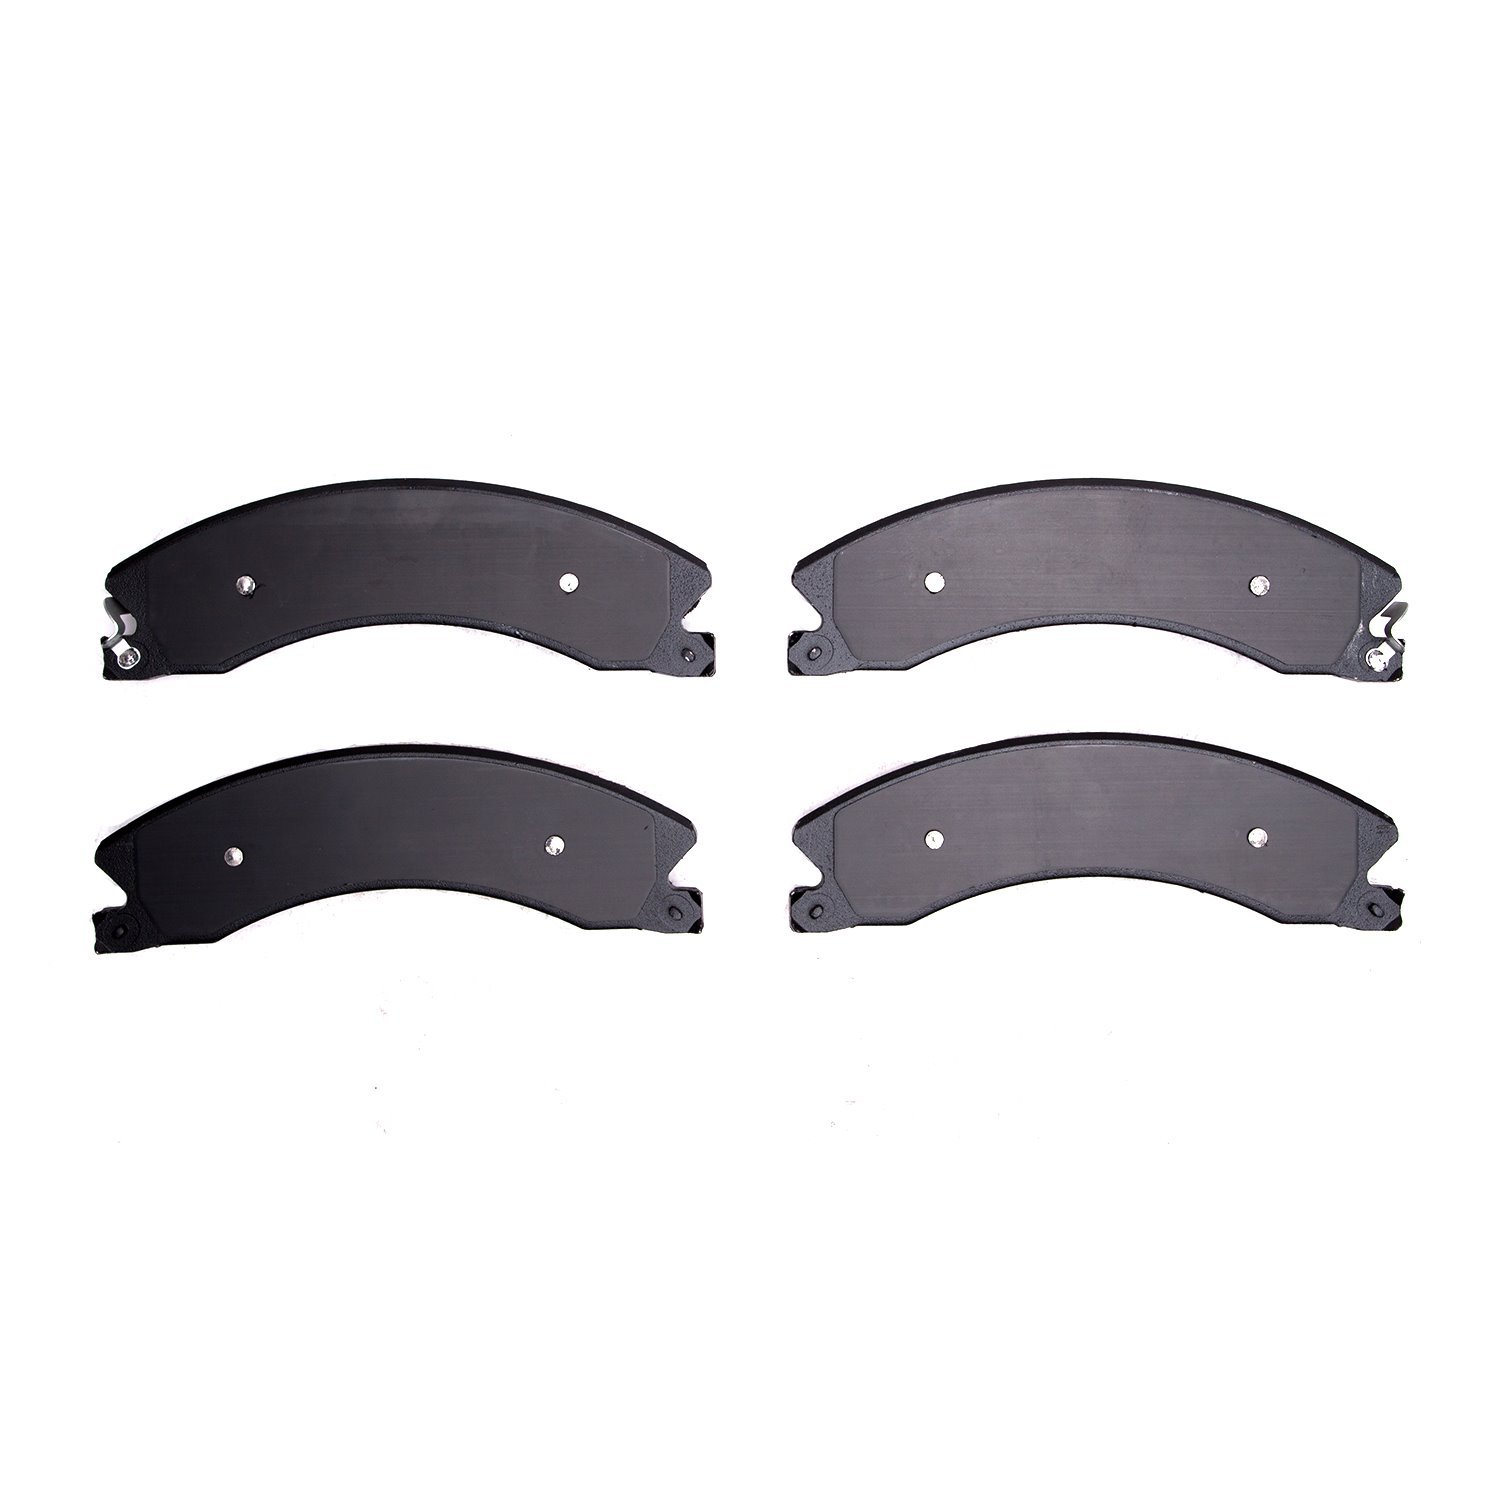 1214-1565-00 Heavy-Duty Semi-Metallic Brake Pads, Fits Select Multiple Makes/Models, Position: Front,Fr,Rear,Rr